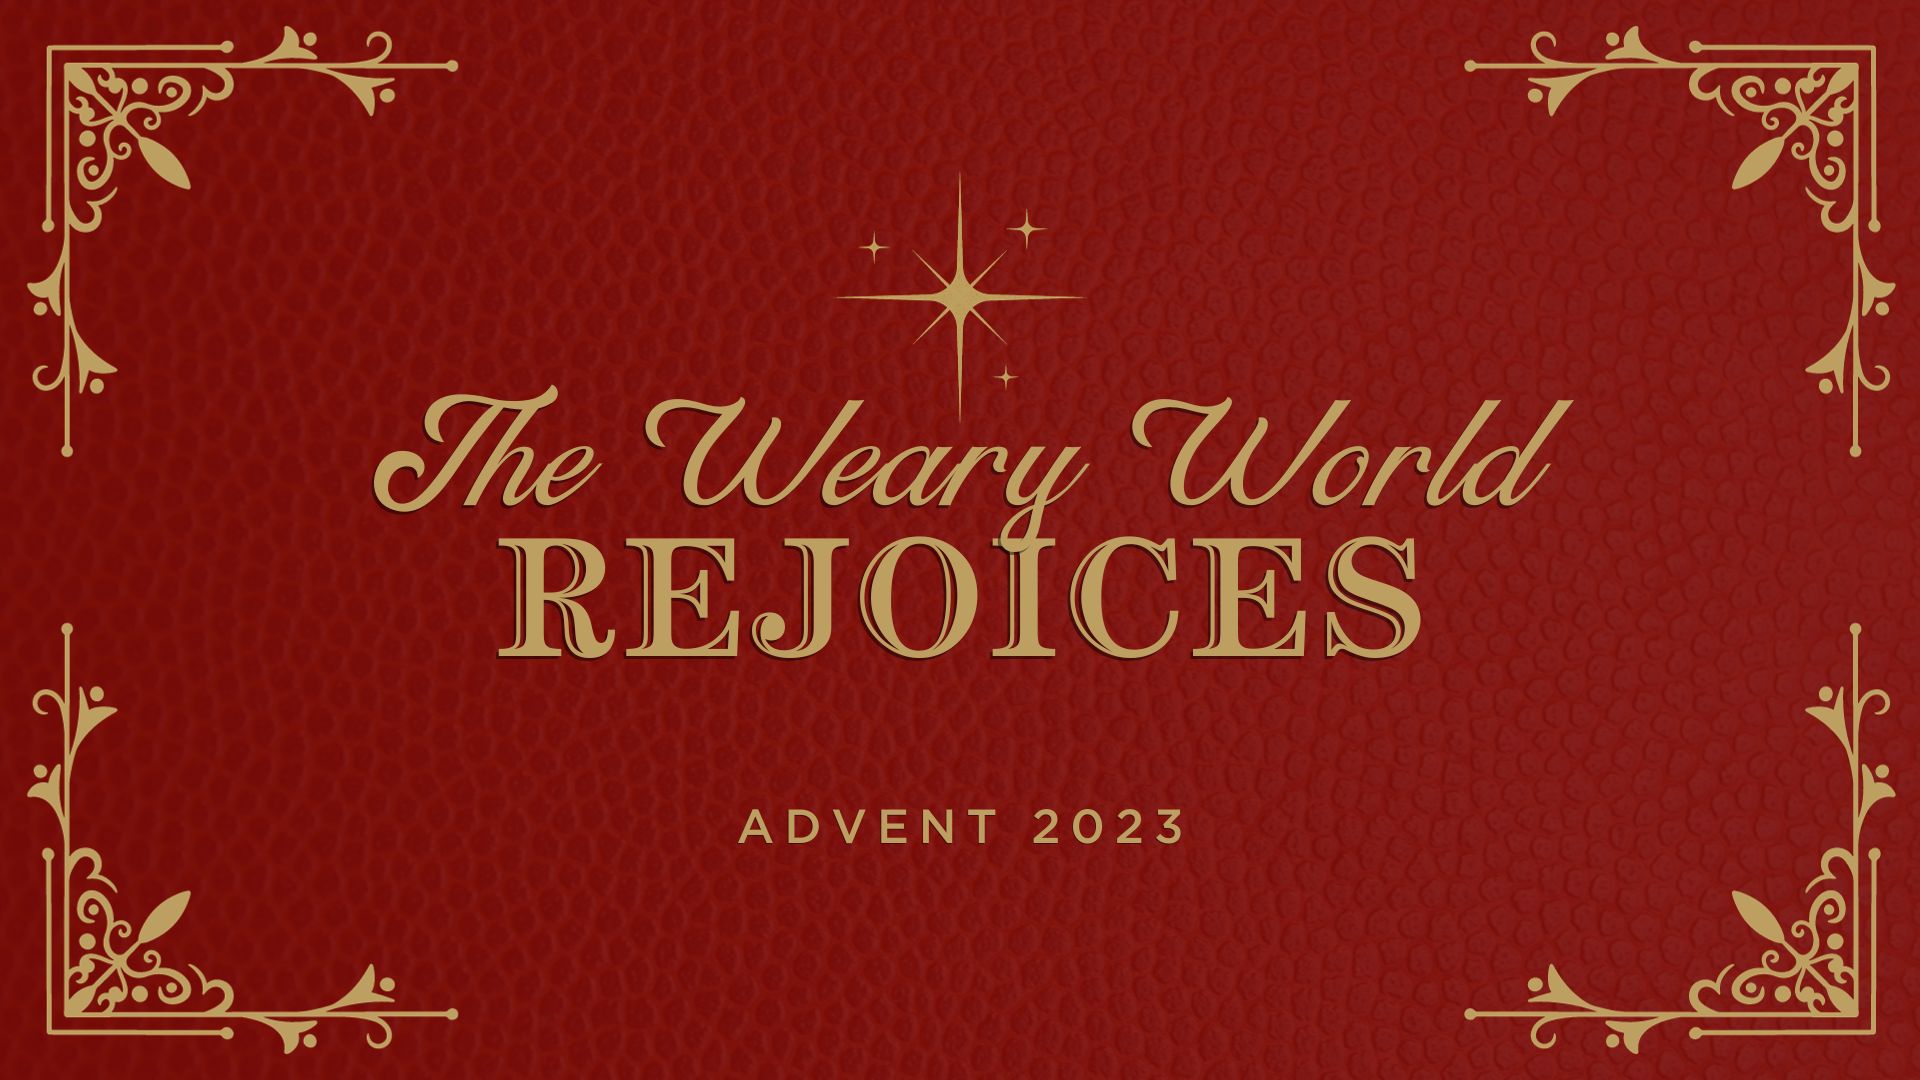 2023 Advent sermon series image